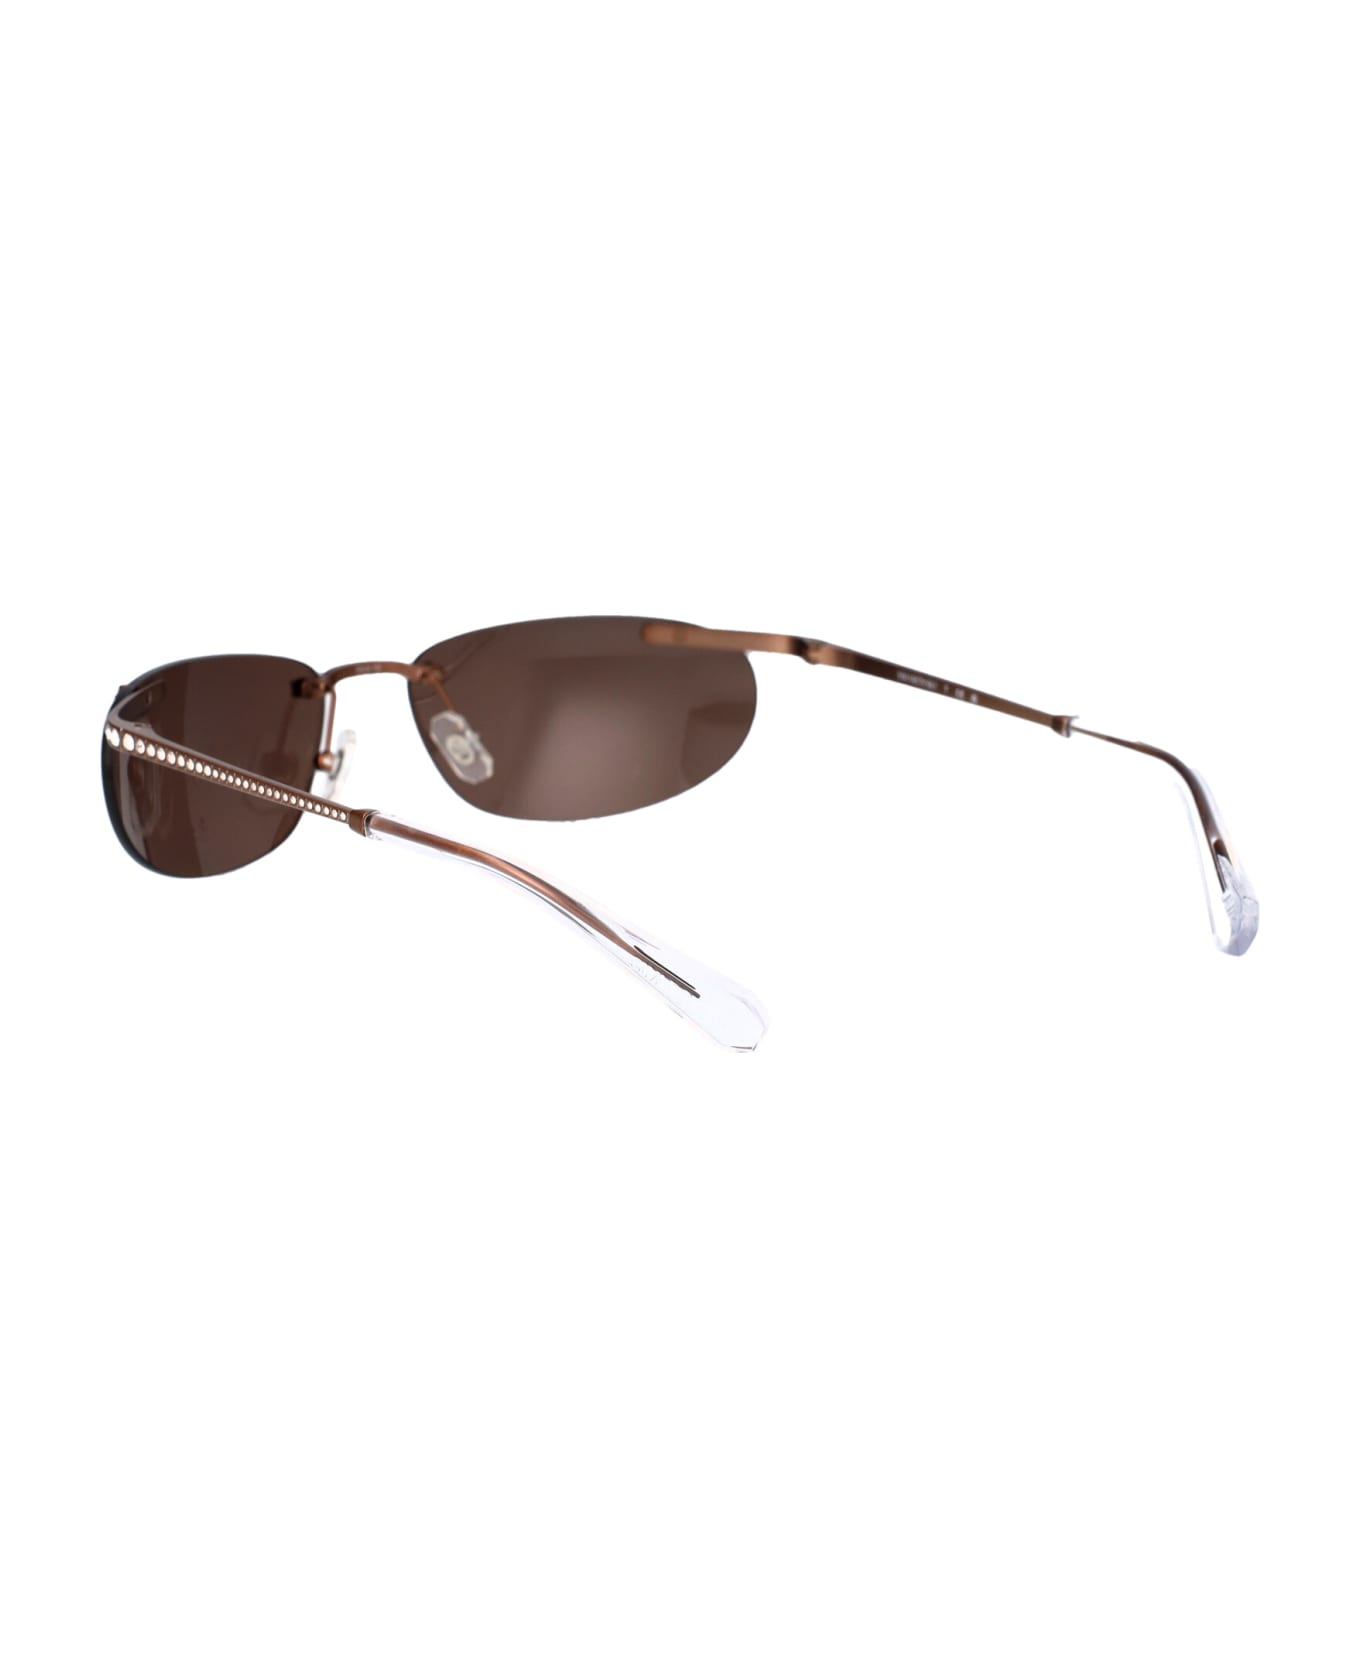 Swarovski 0sk7019 Sunglasses - 400273 Matte Brown